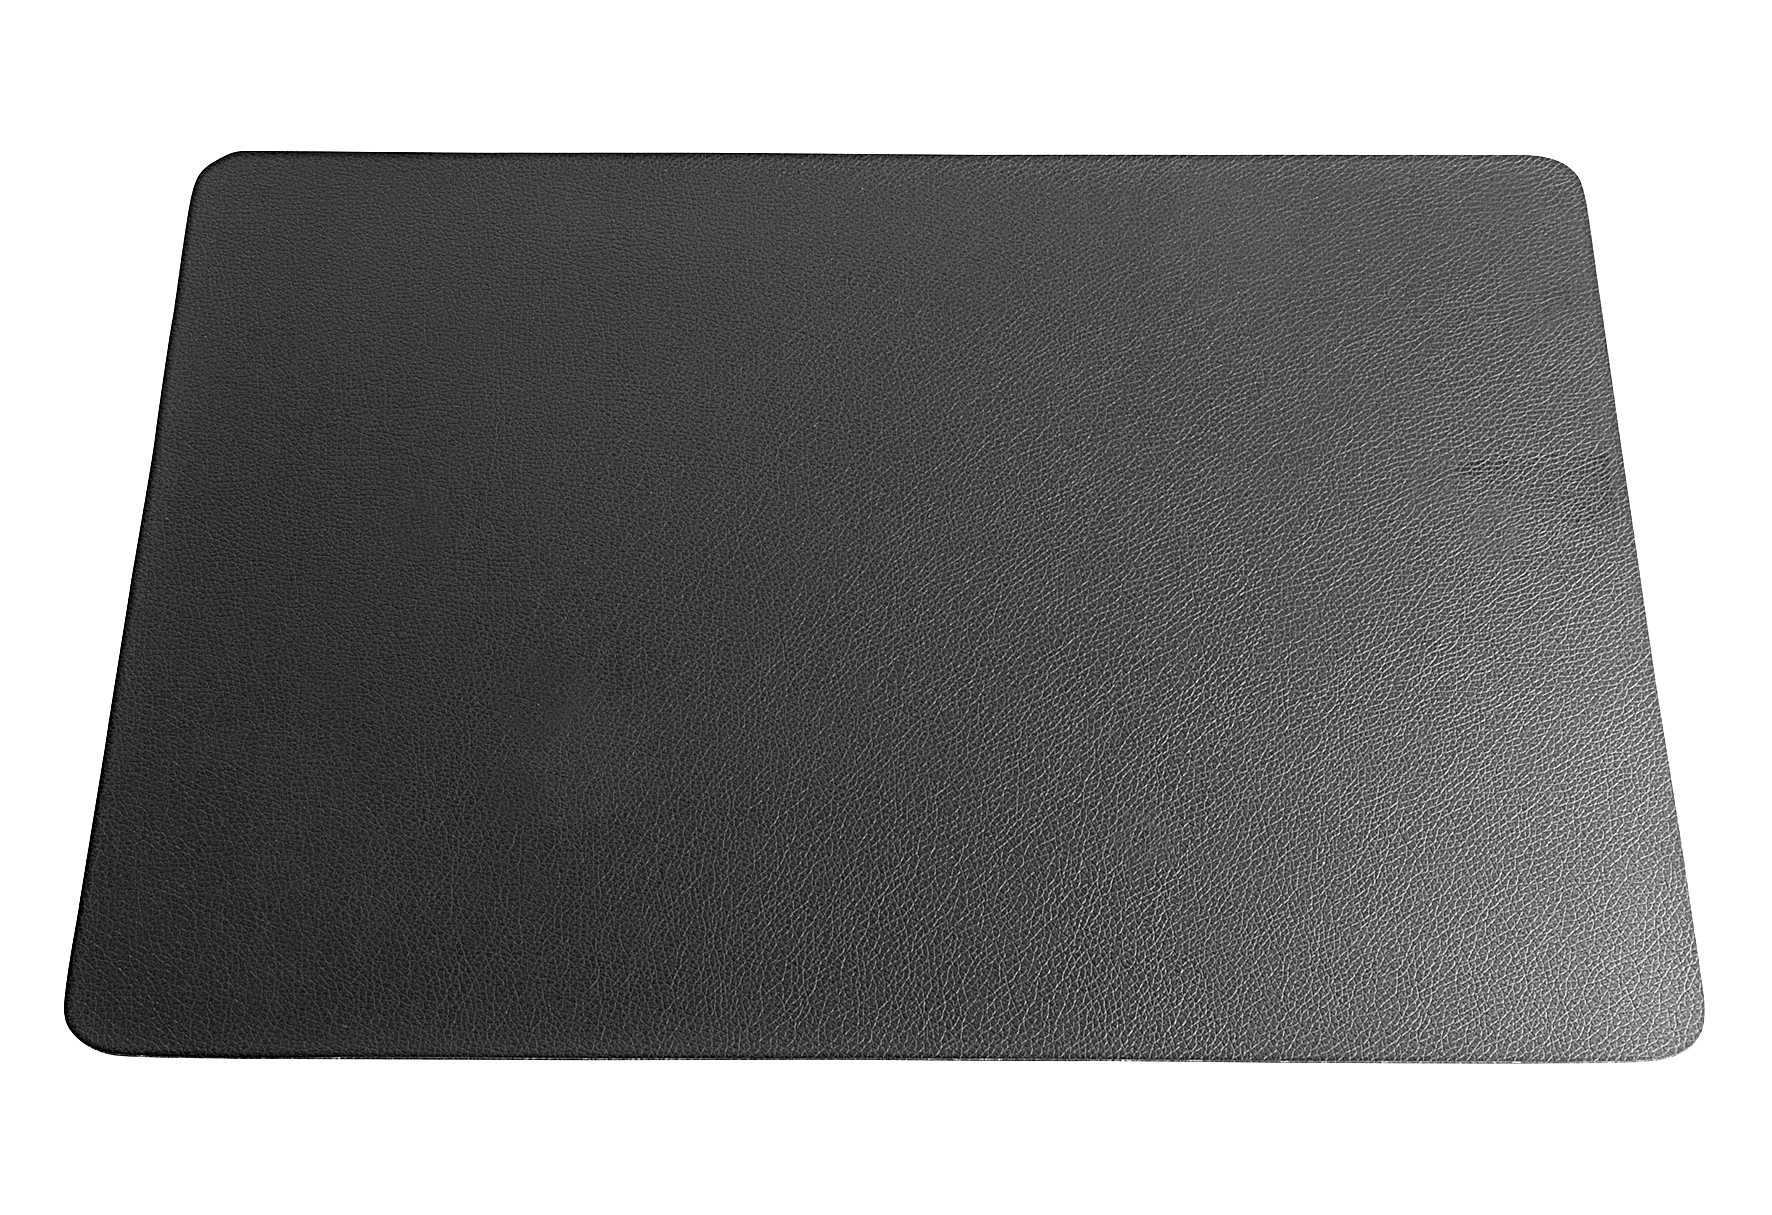 Tischset Lederoptik 46x33cm schwarz